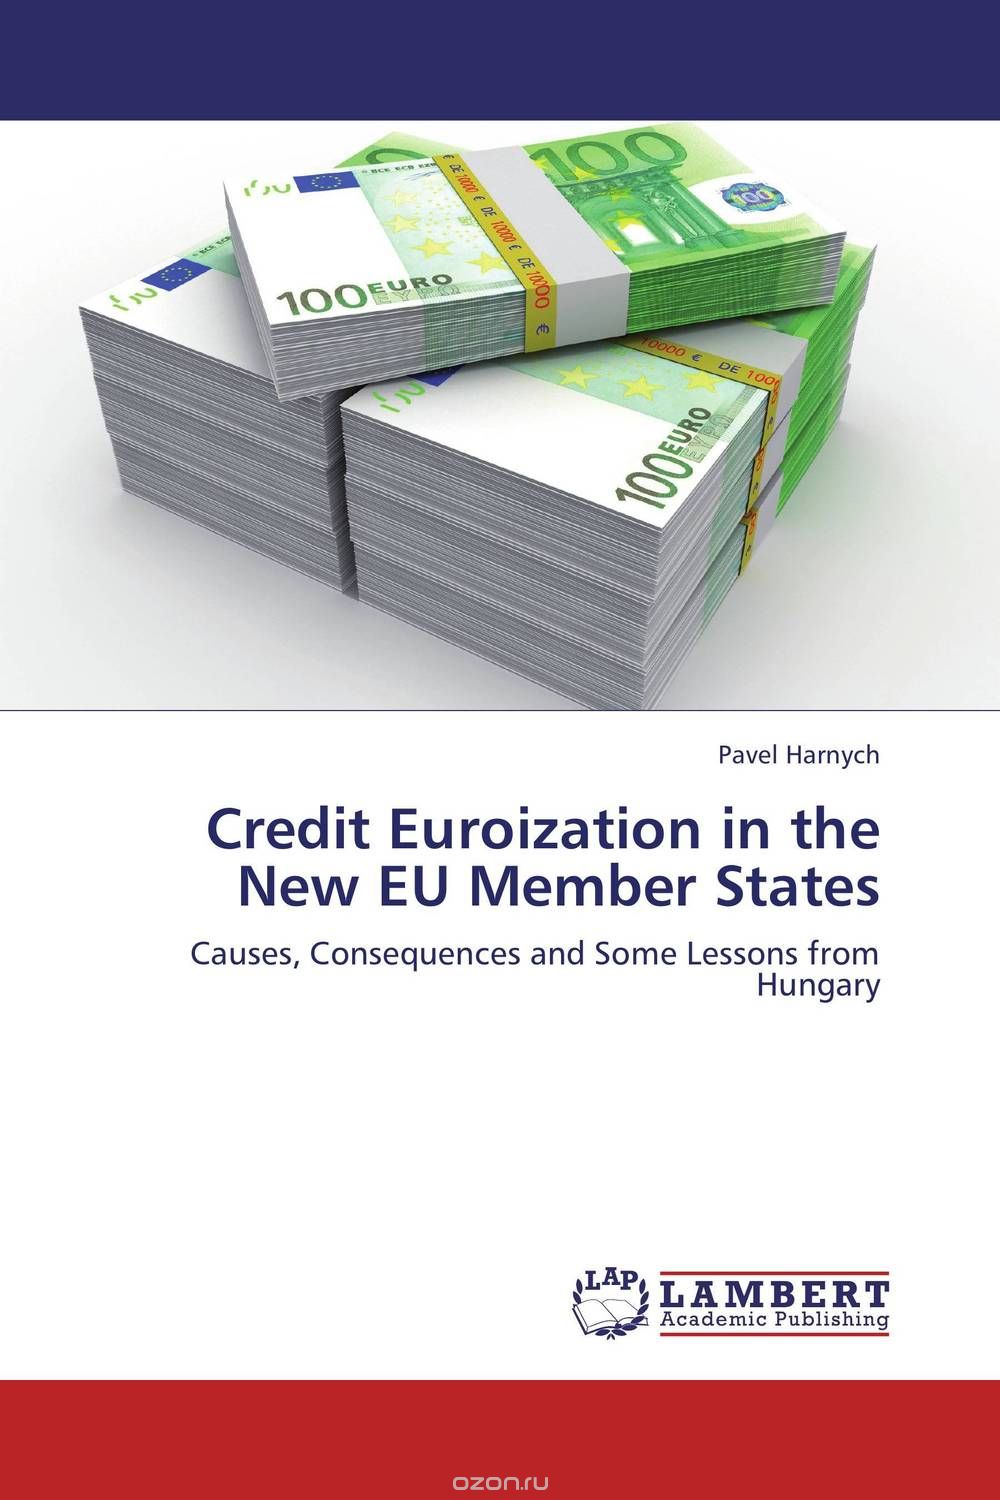 Скачать книгу "Credit Euroization in the New EU Member States"